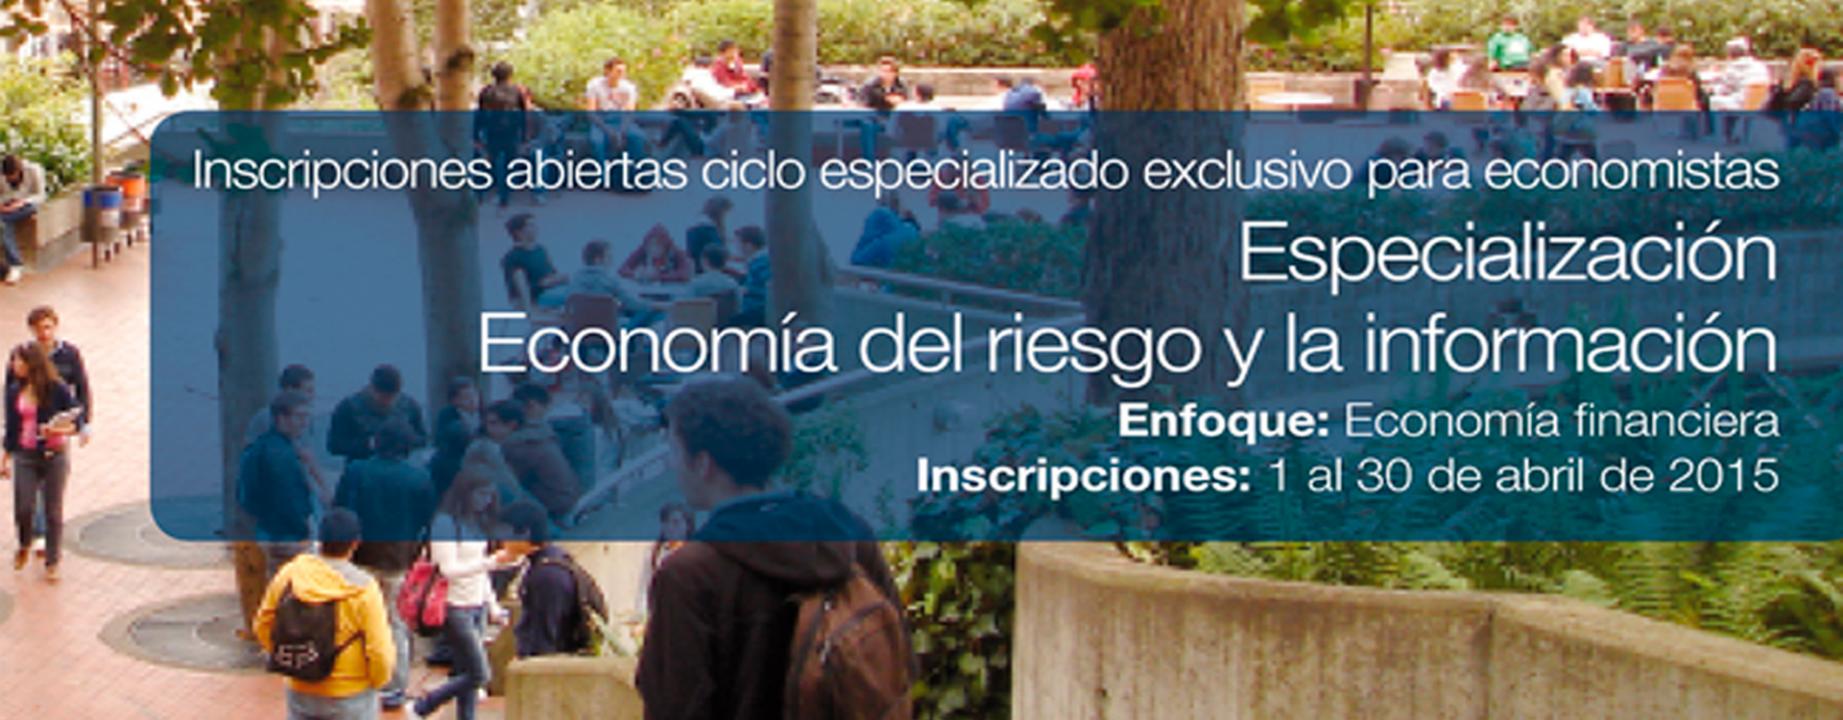 Especializacion-economia-riesgo-banner